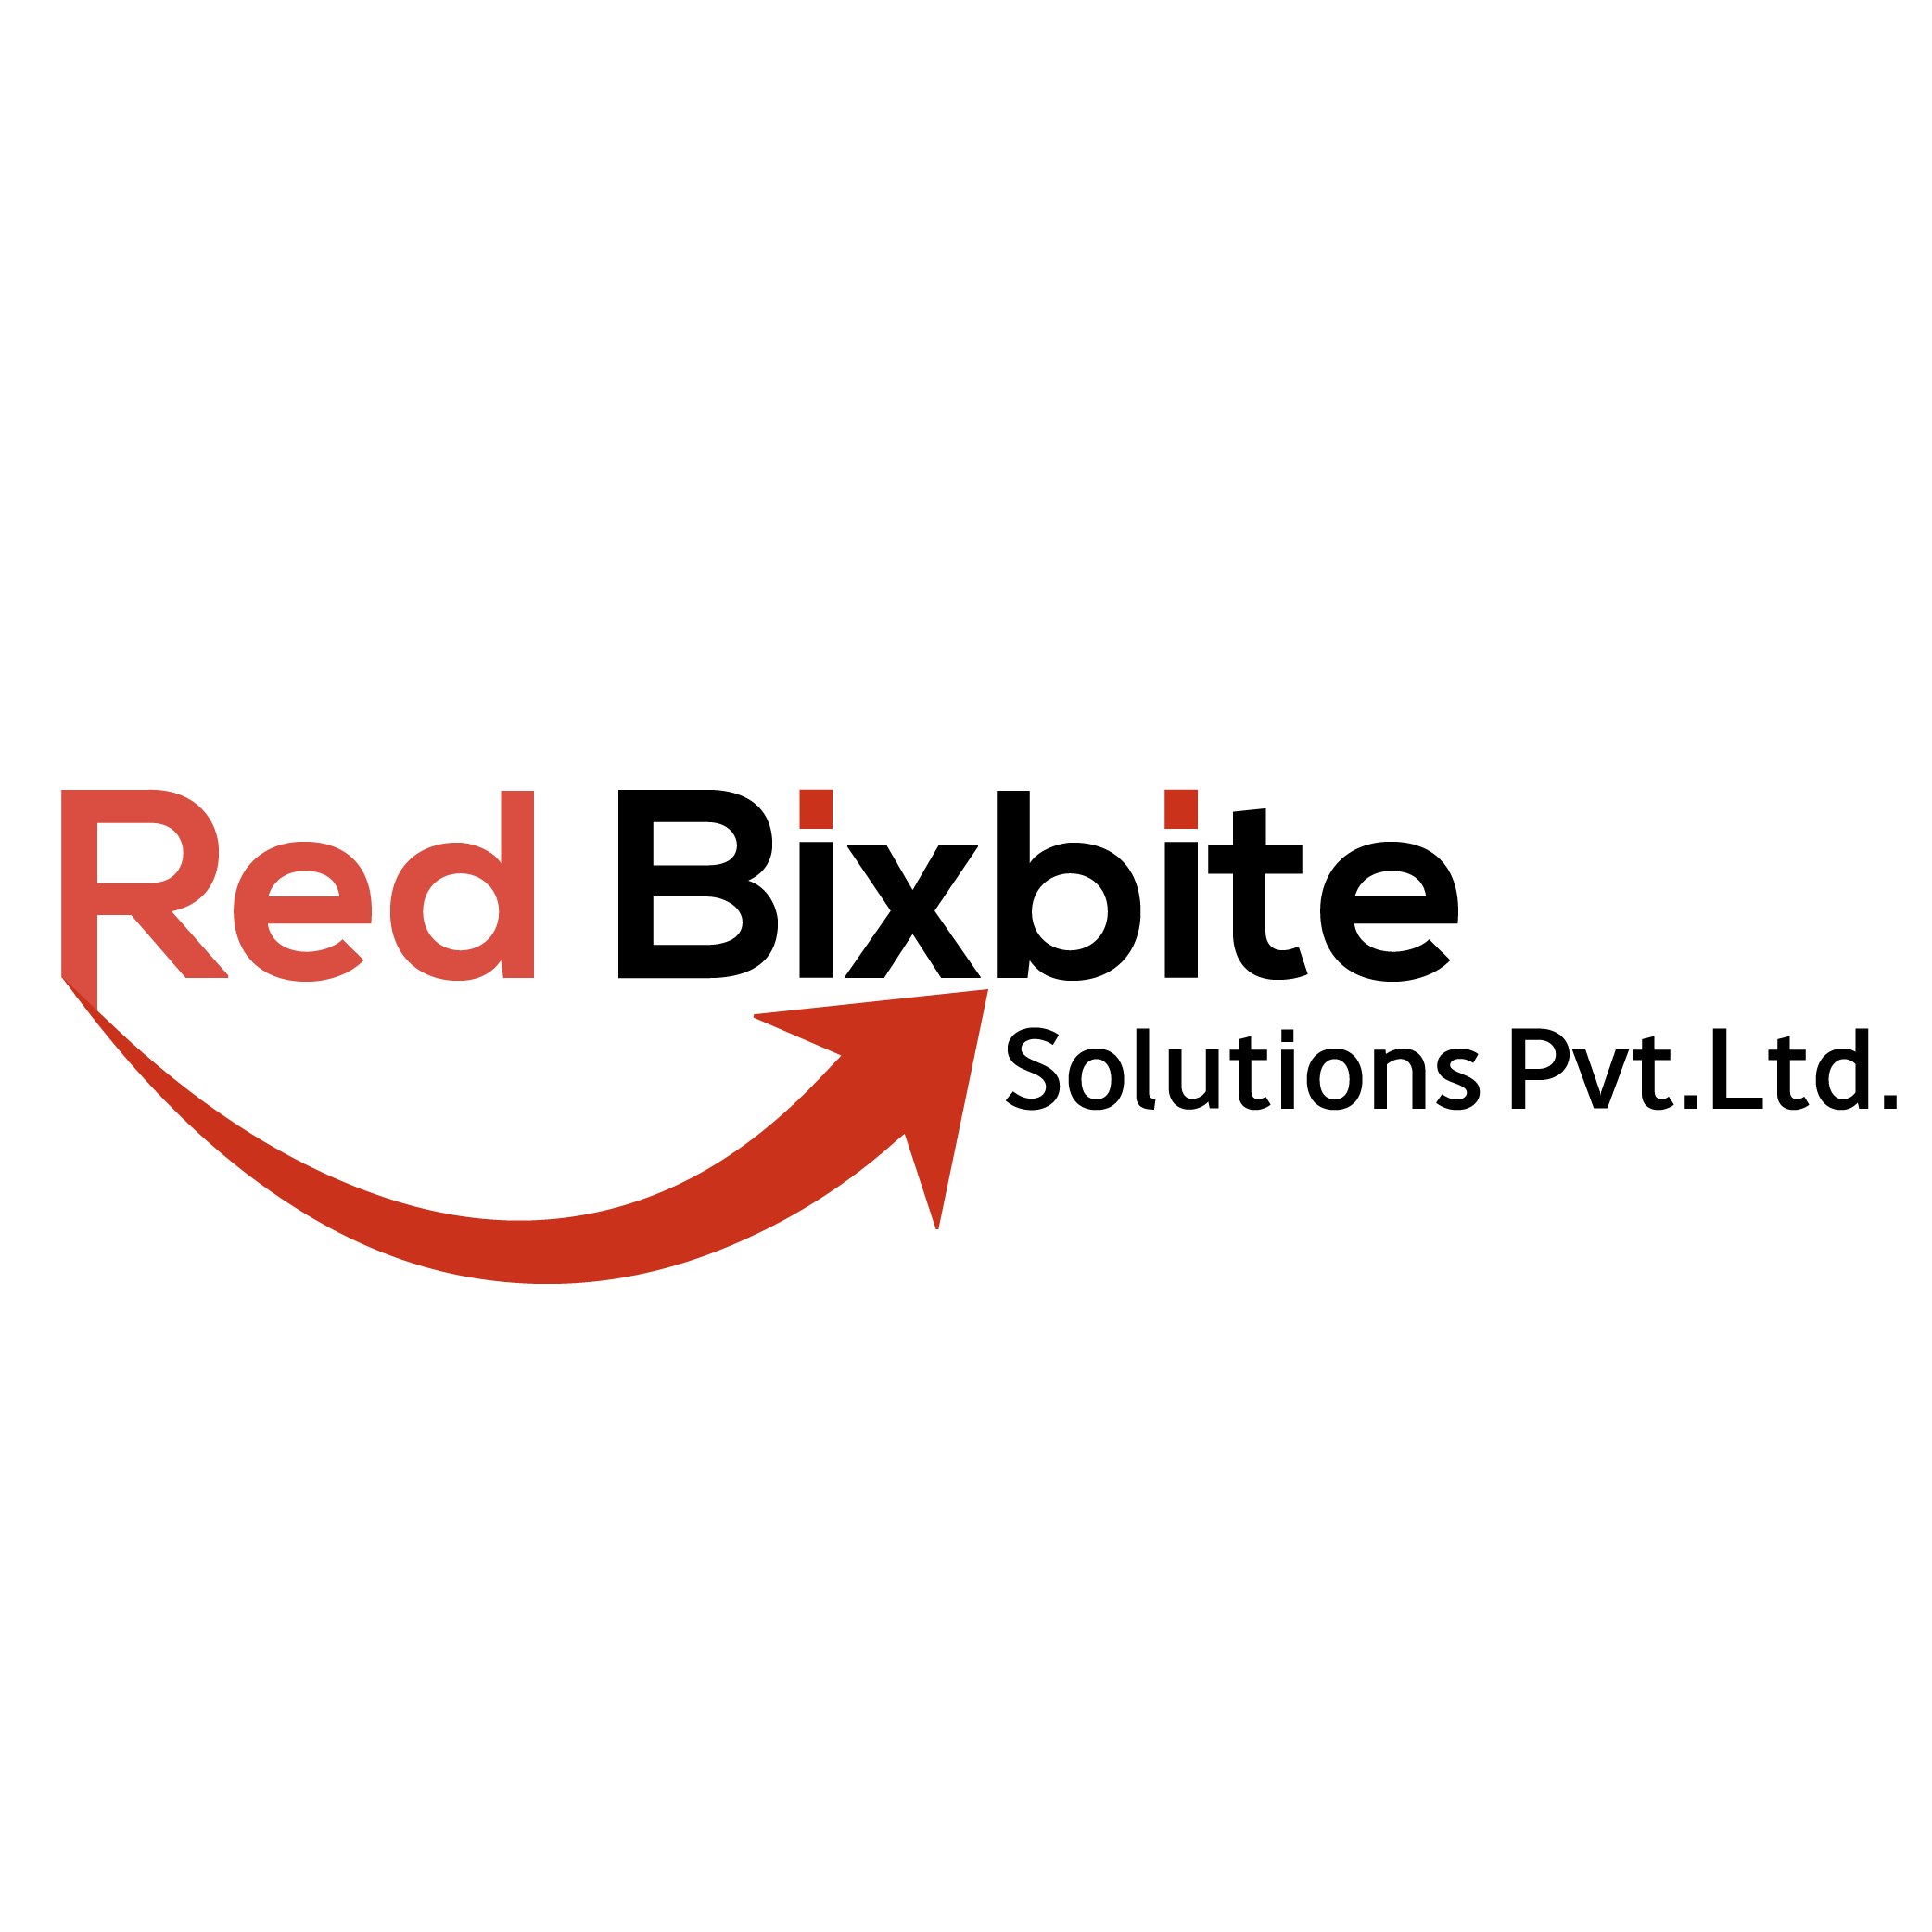 Red Bixbite Solutions Pvt. Ltd.